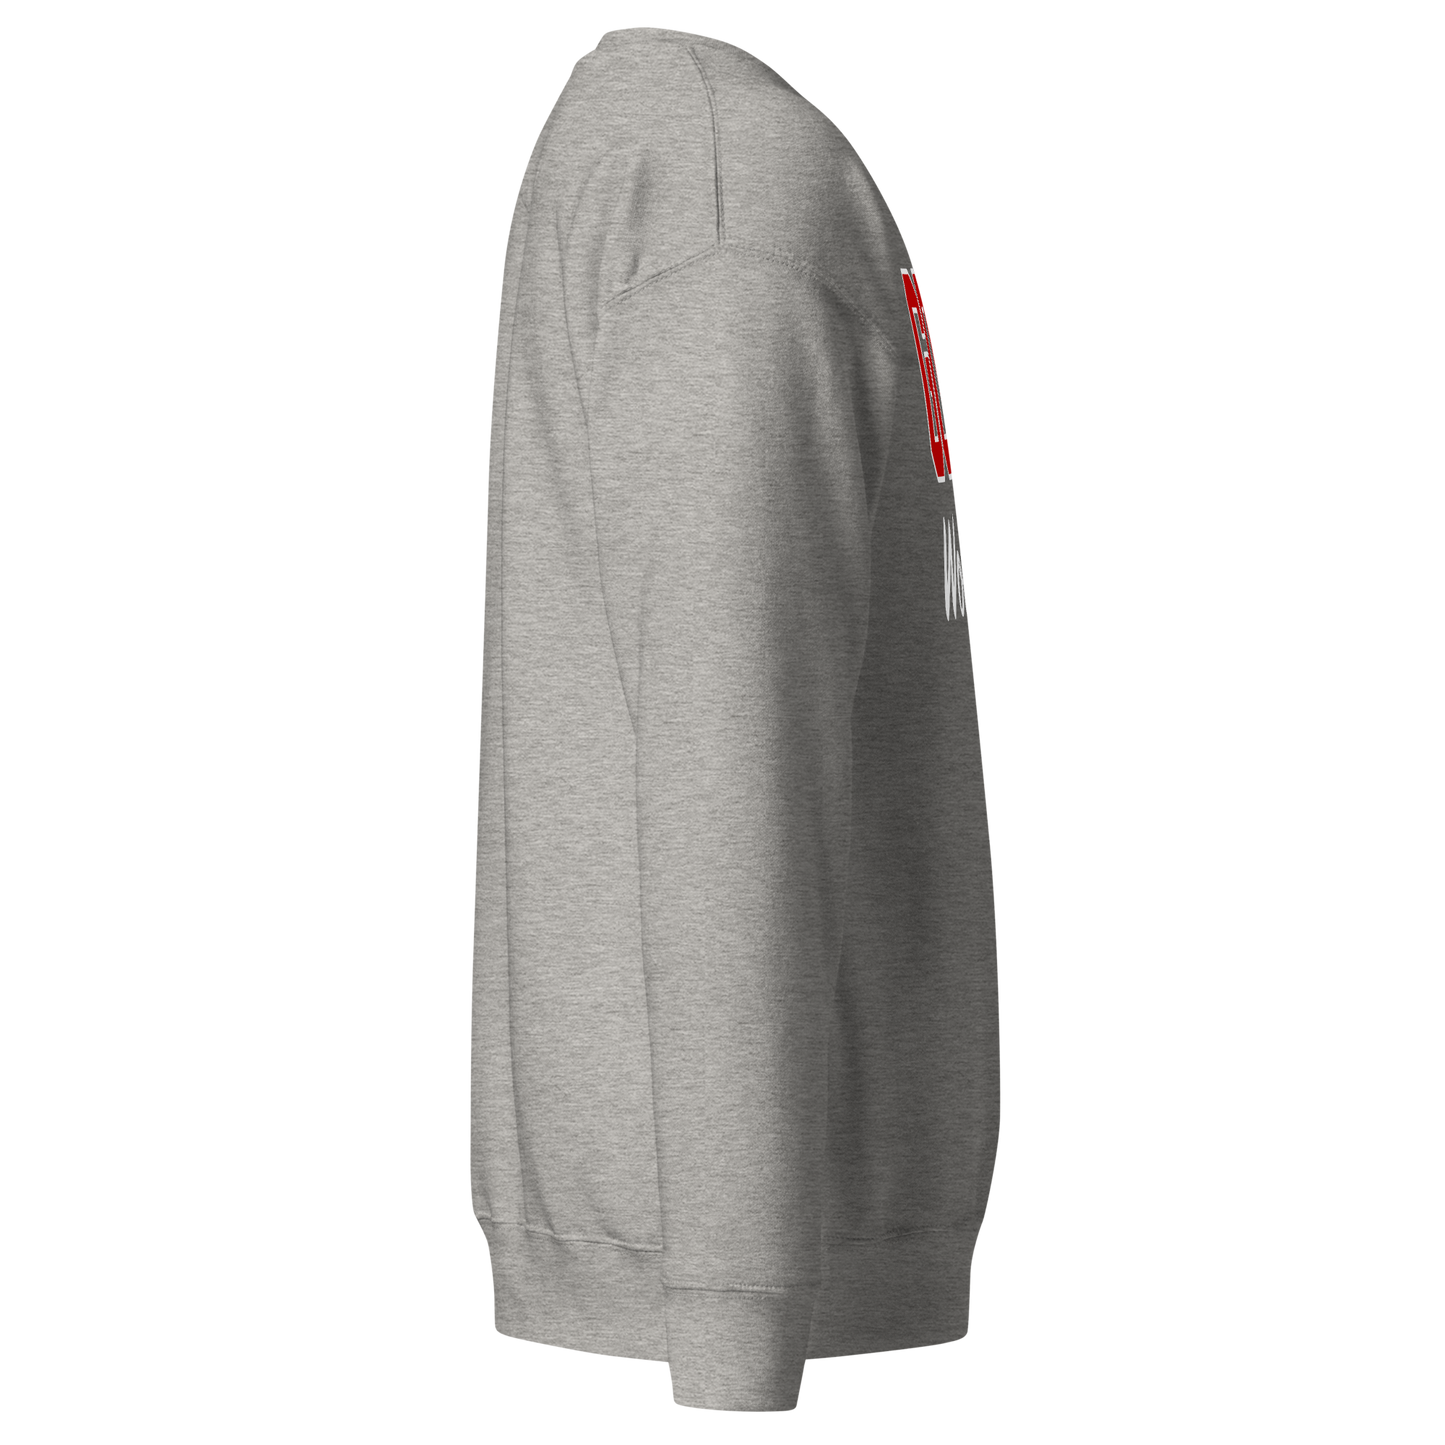 GOHS Wolfpack Unisex Premium Sweatshirt